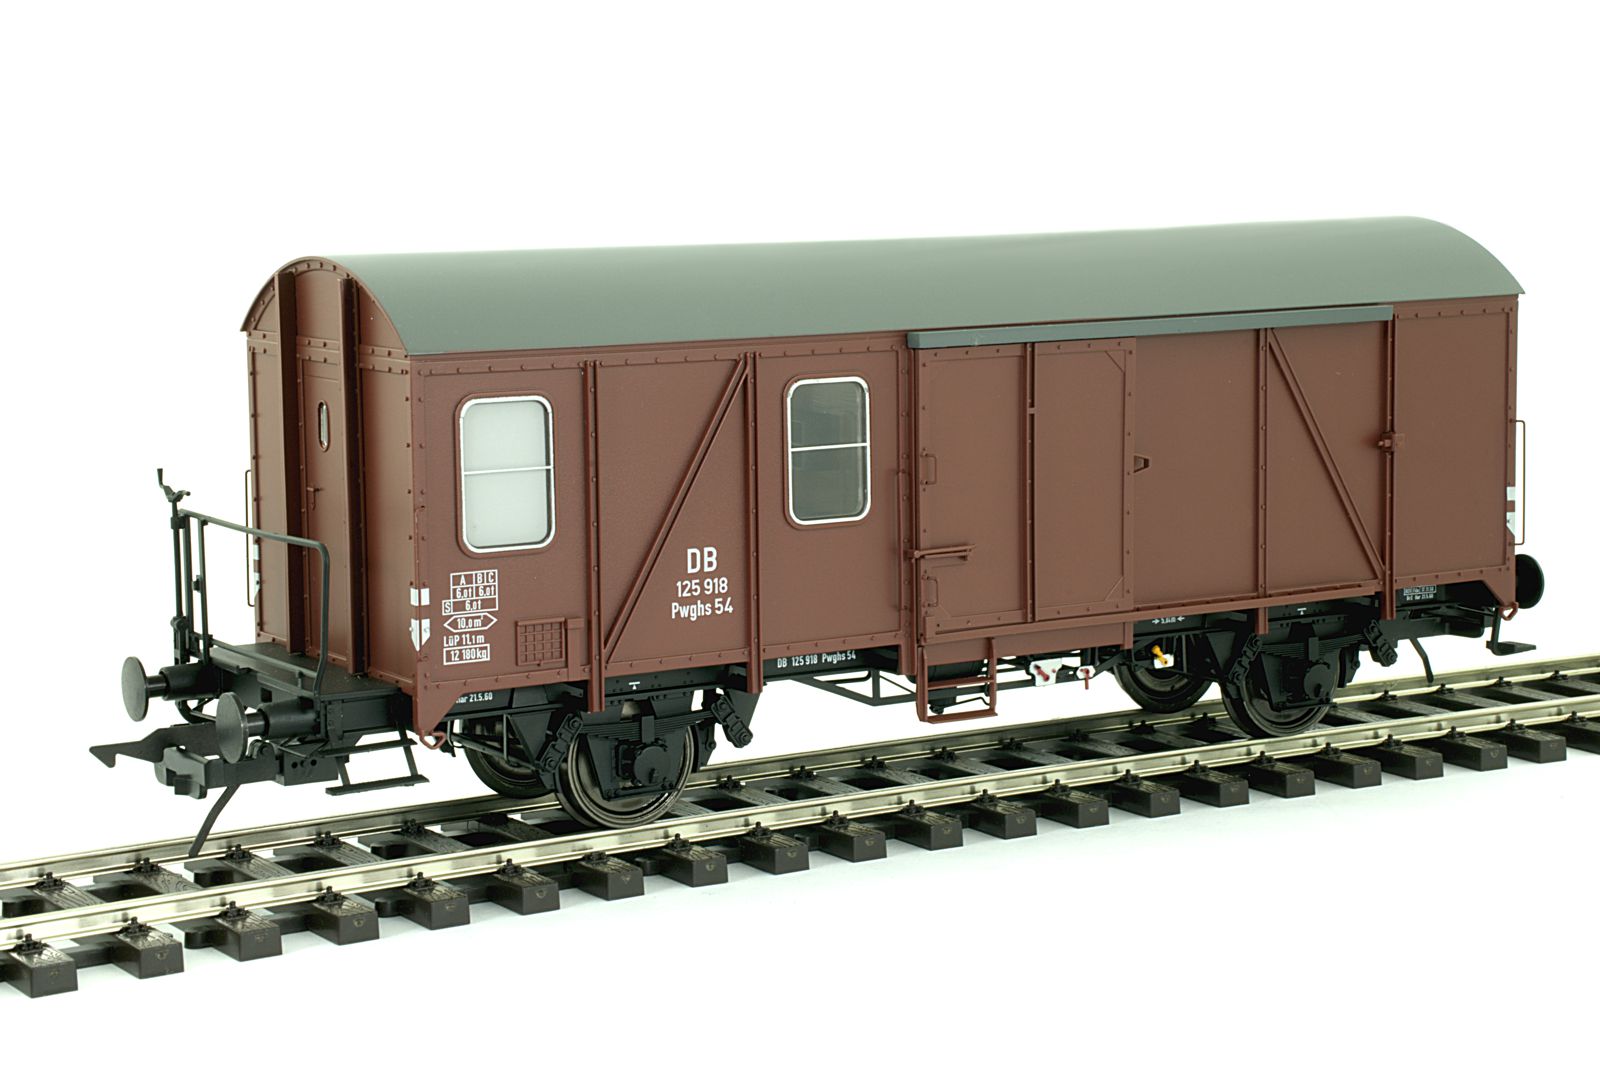 DB Güterzuggepäckwag Pwghs54 Ep. III, mit Bremserbühne, braun, Betr.-Nr.: 125 918